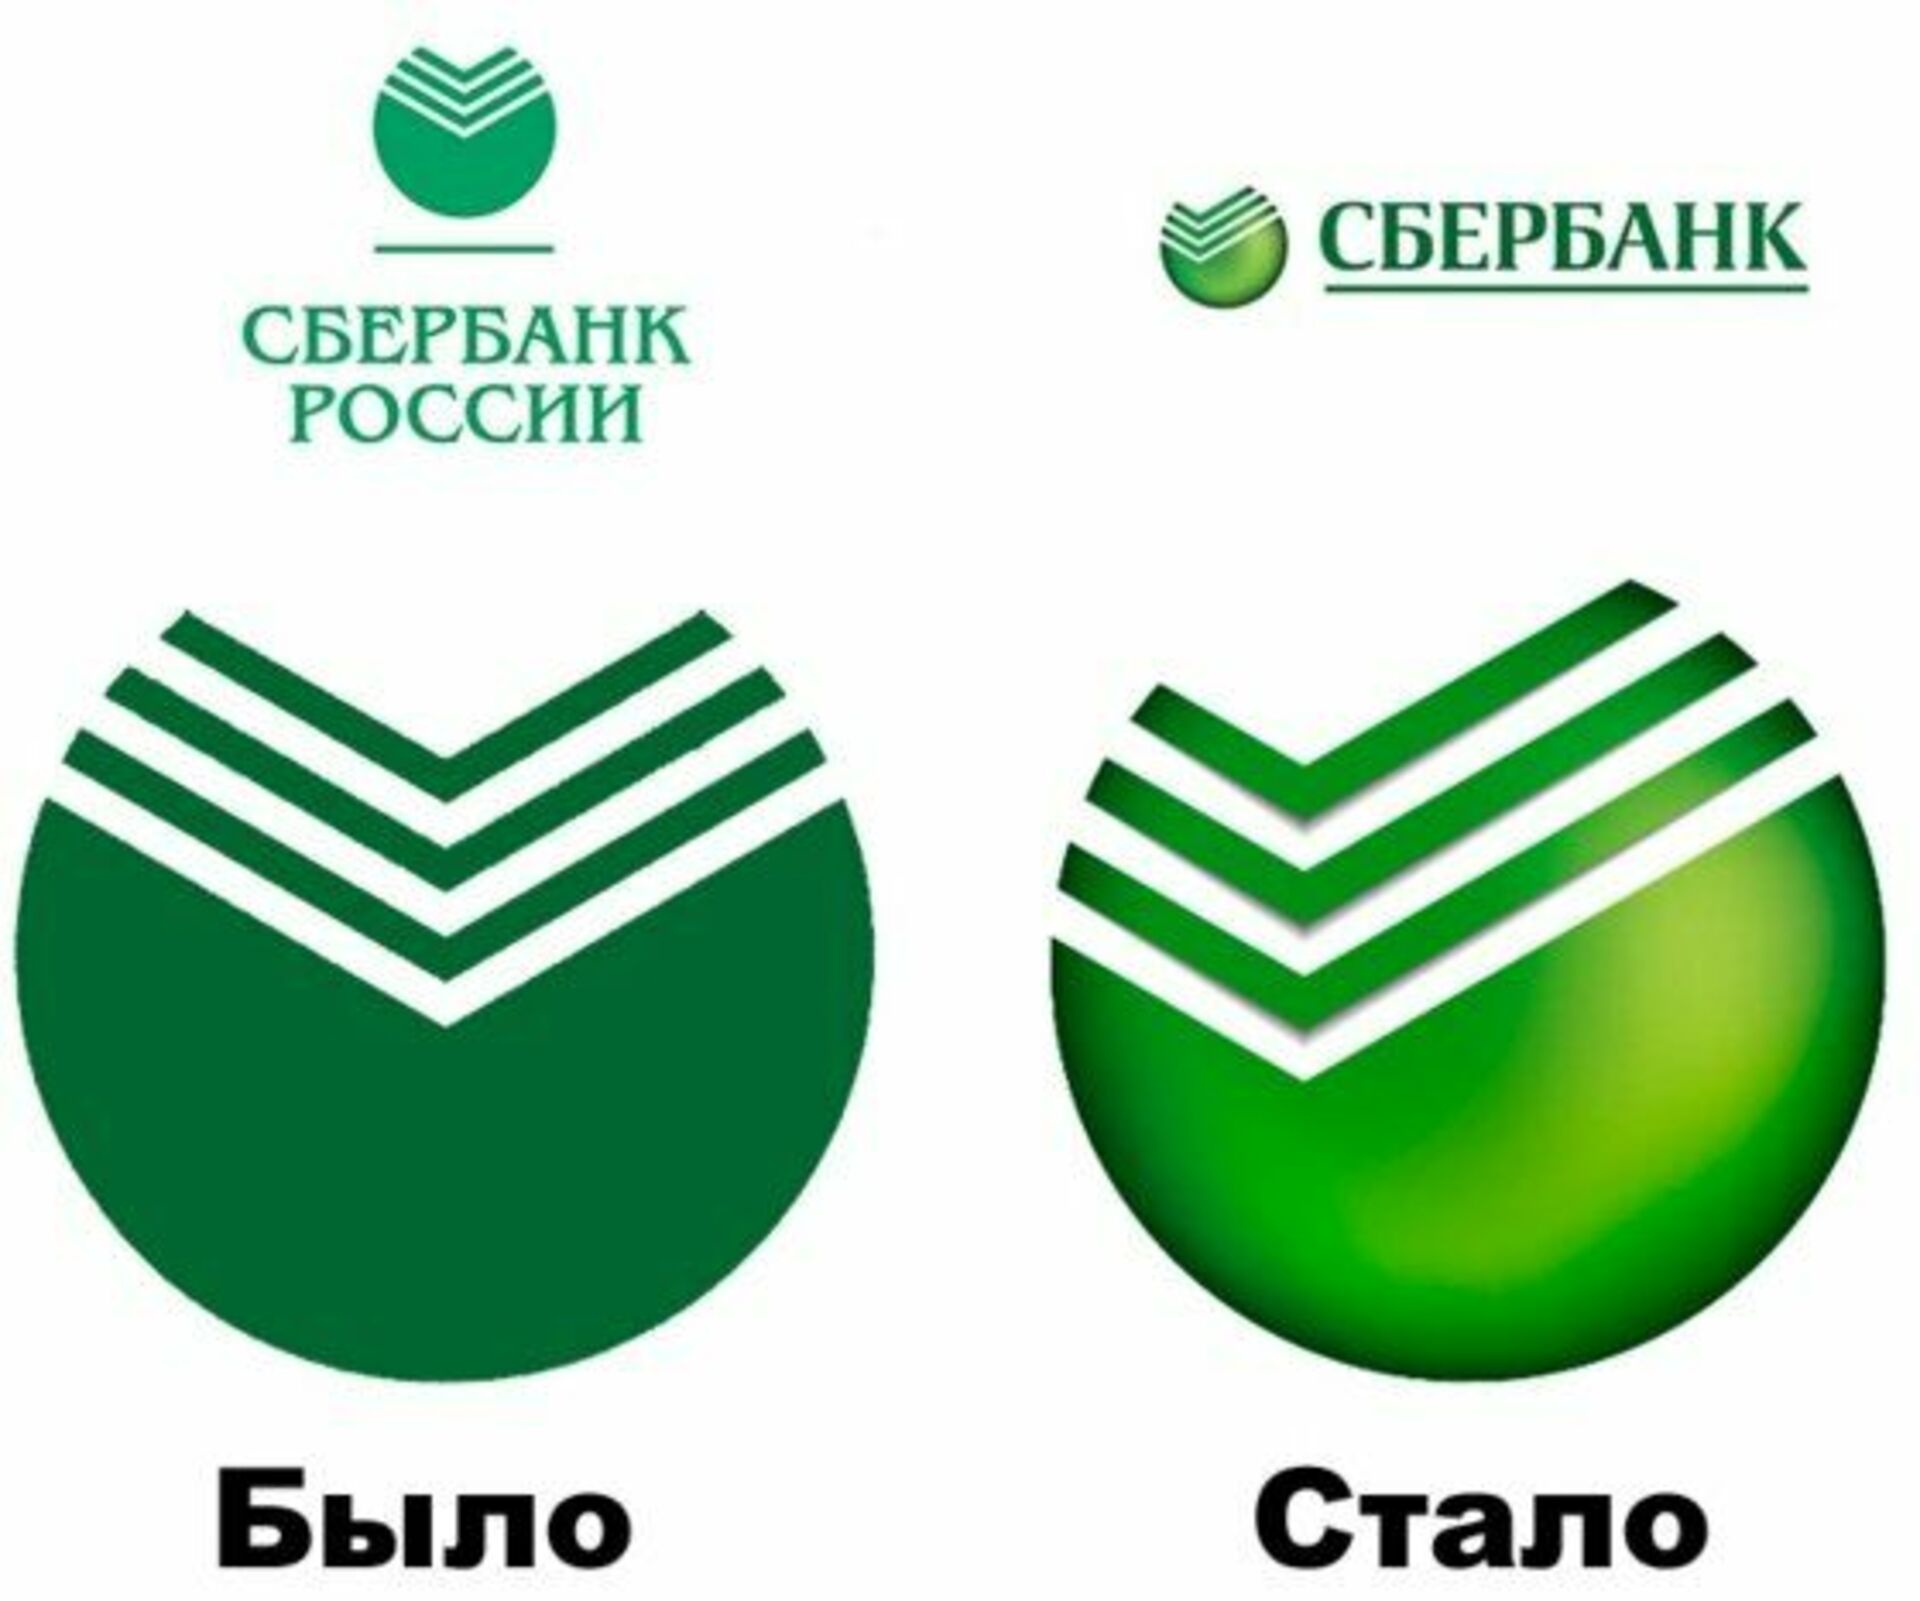 Sberbank type. Сбербанк логотип. Старый логотип Сбербанка. Логотип Сбера новый. Ребрендинг Сбербанка.